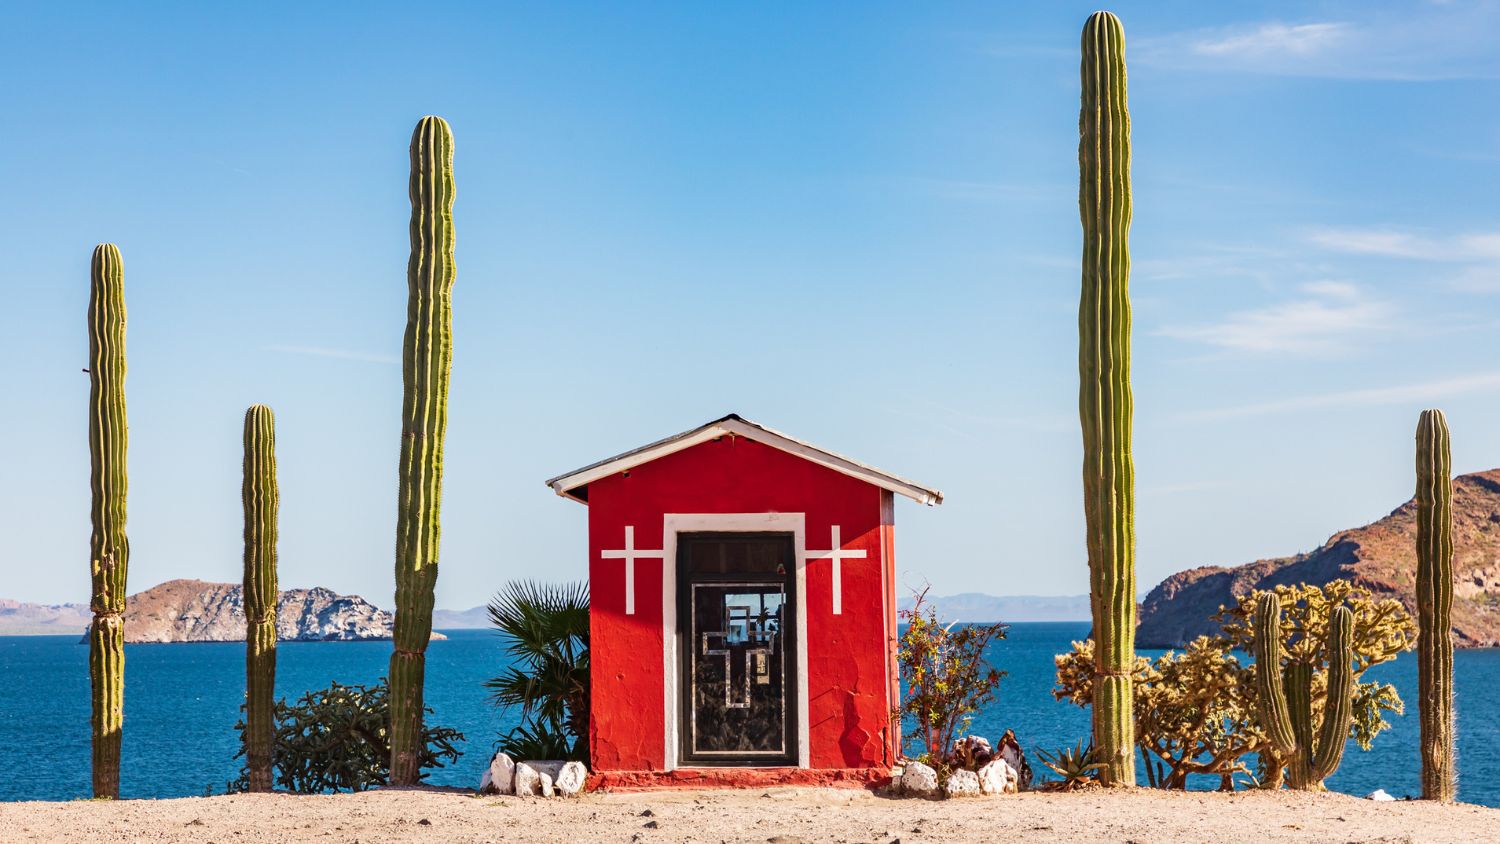 Playa el Burro, Mulege, Baja California Sur, Mexico. A small Catholic shrine on the Sea of Cortez.